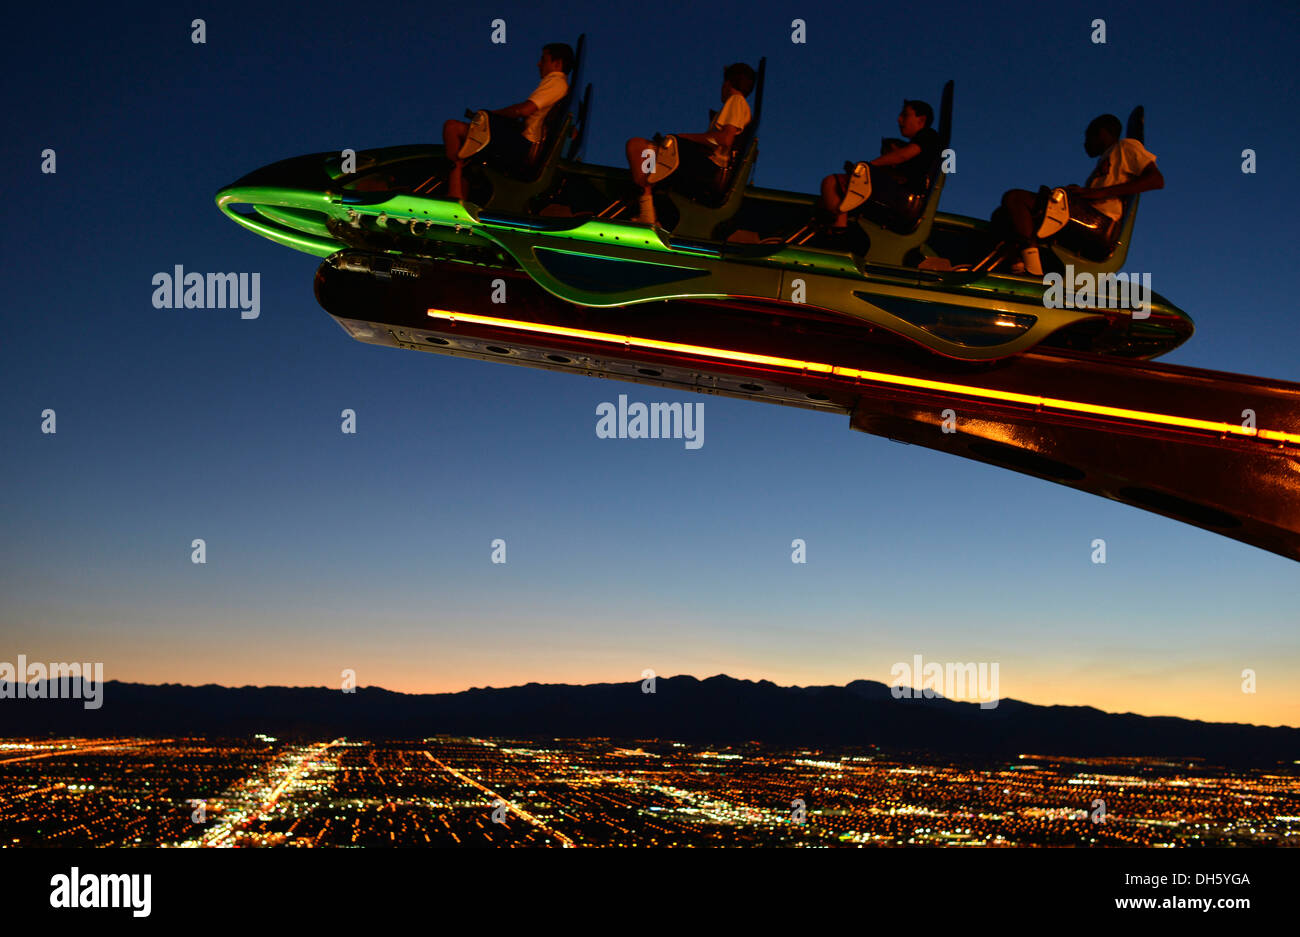 X-Scream Insanity, carousel ride at night, Stratoshere Tower Hotel, Las Vegas, Nevada, United States of America, USA Stock Photo